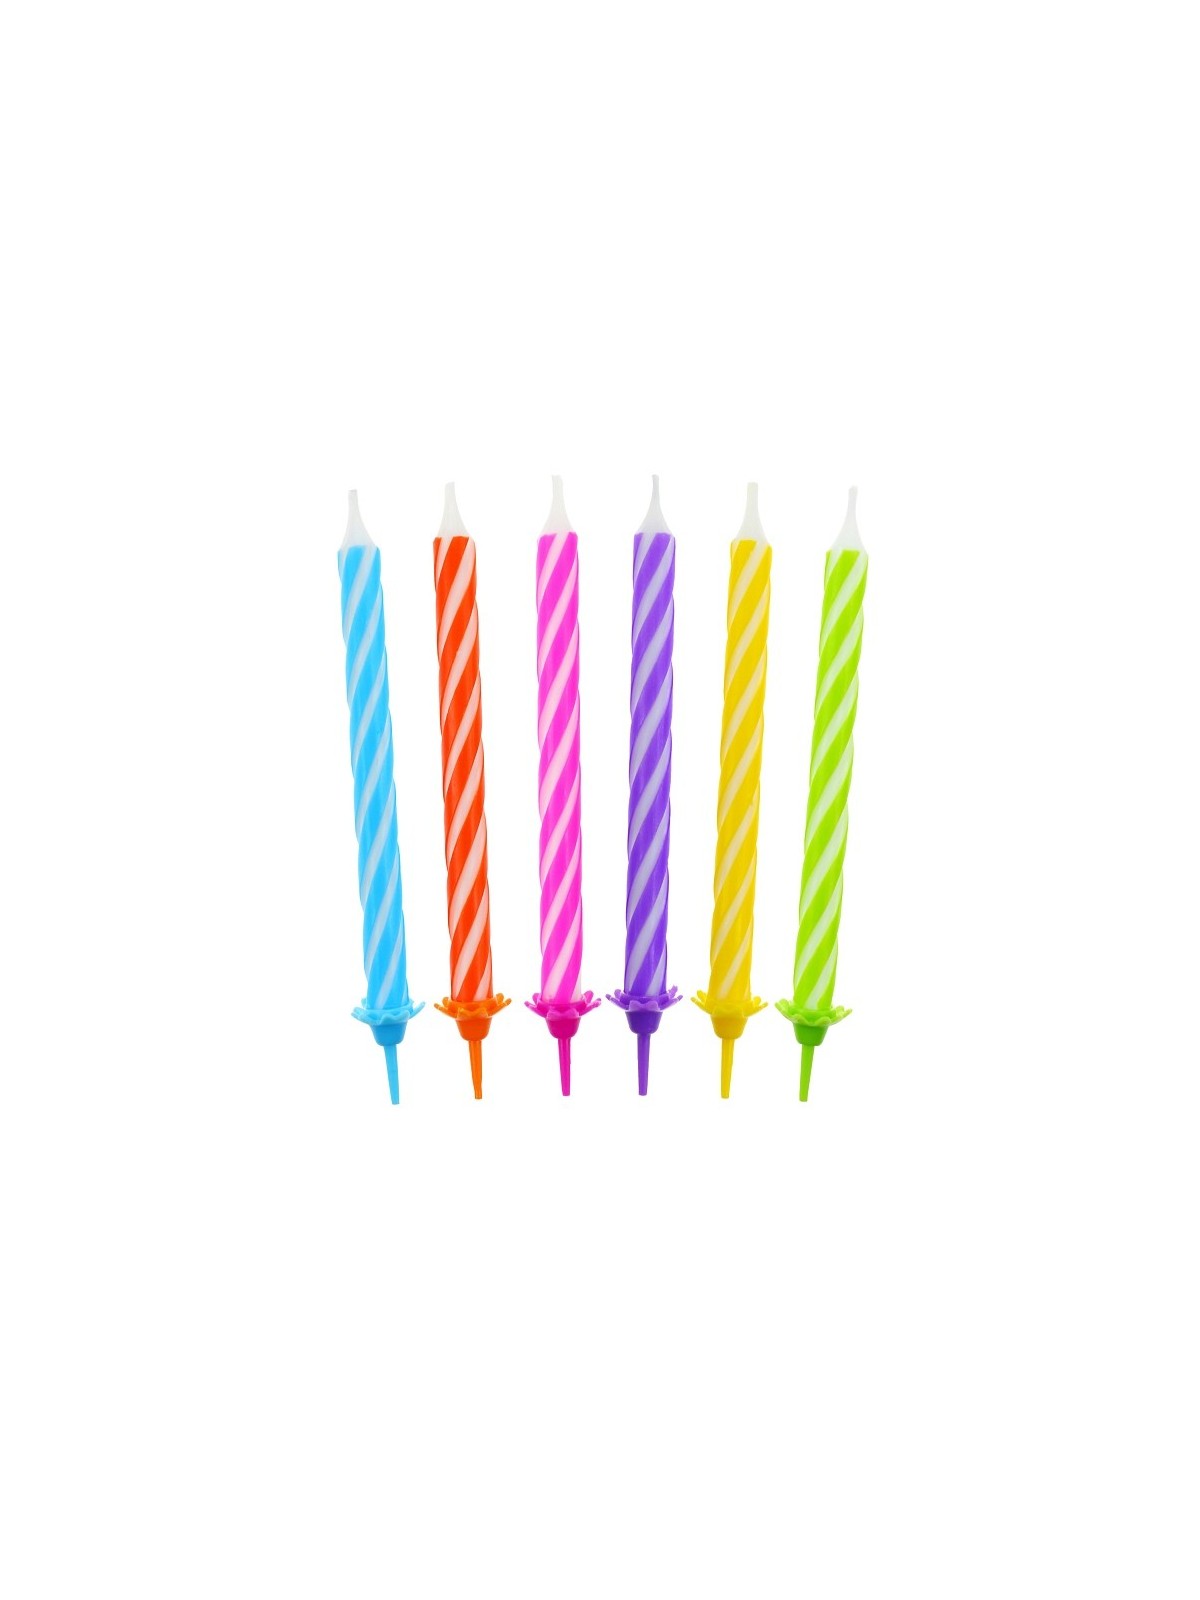 Birthday candles - spiral narrow - 24pcs / 6cm